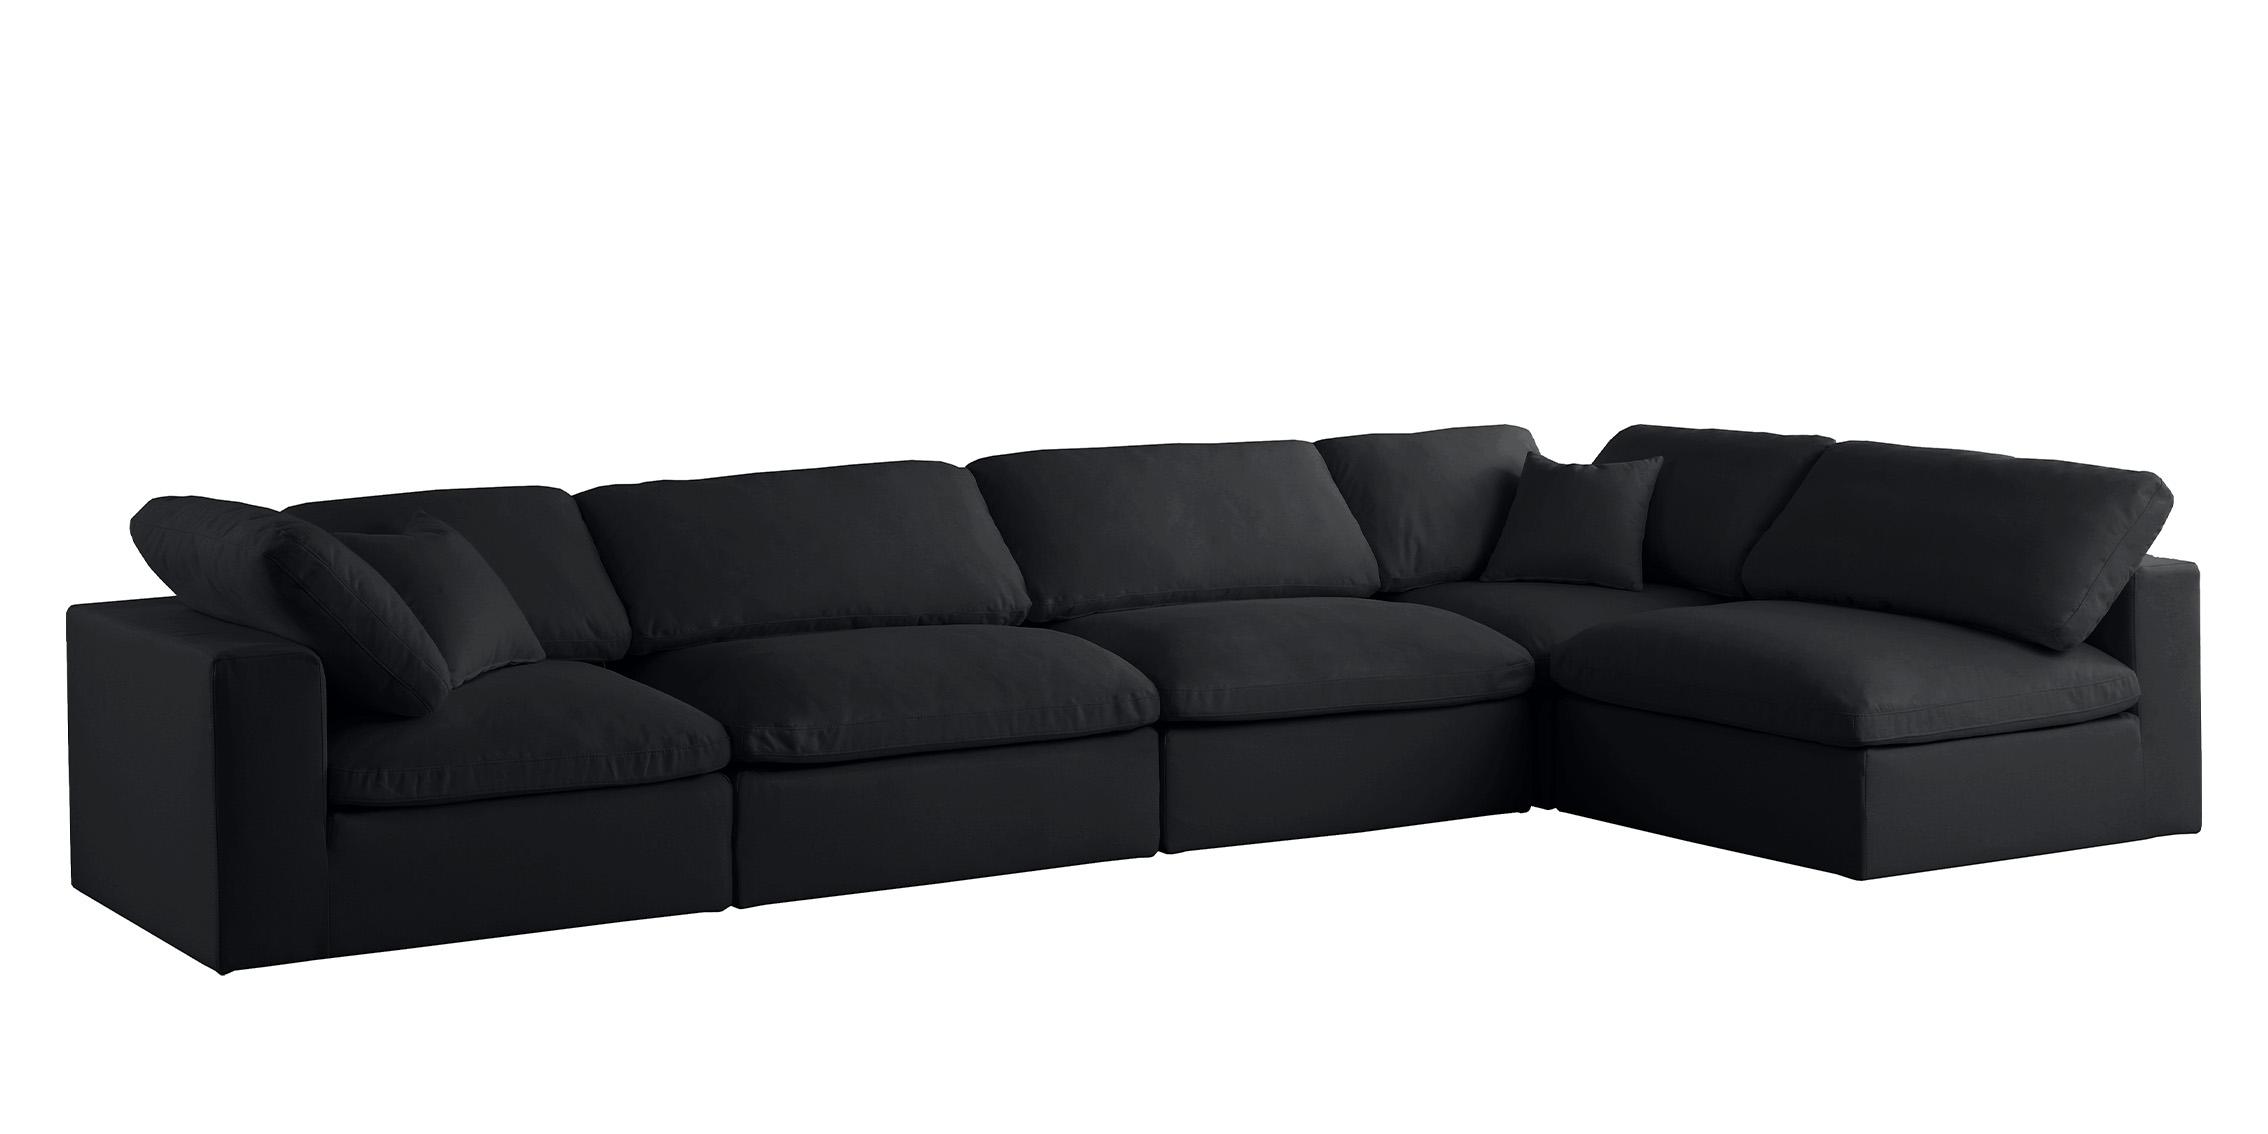 Contemporary, Modern Modular Sectional Sofa 602Black-Sec5D 602Black-Sec5D in Black Fabric